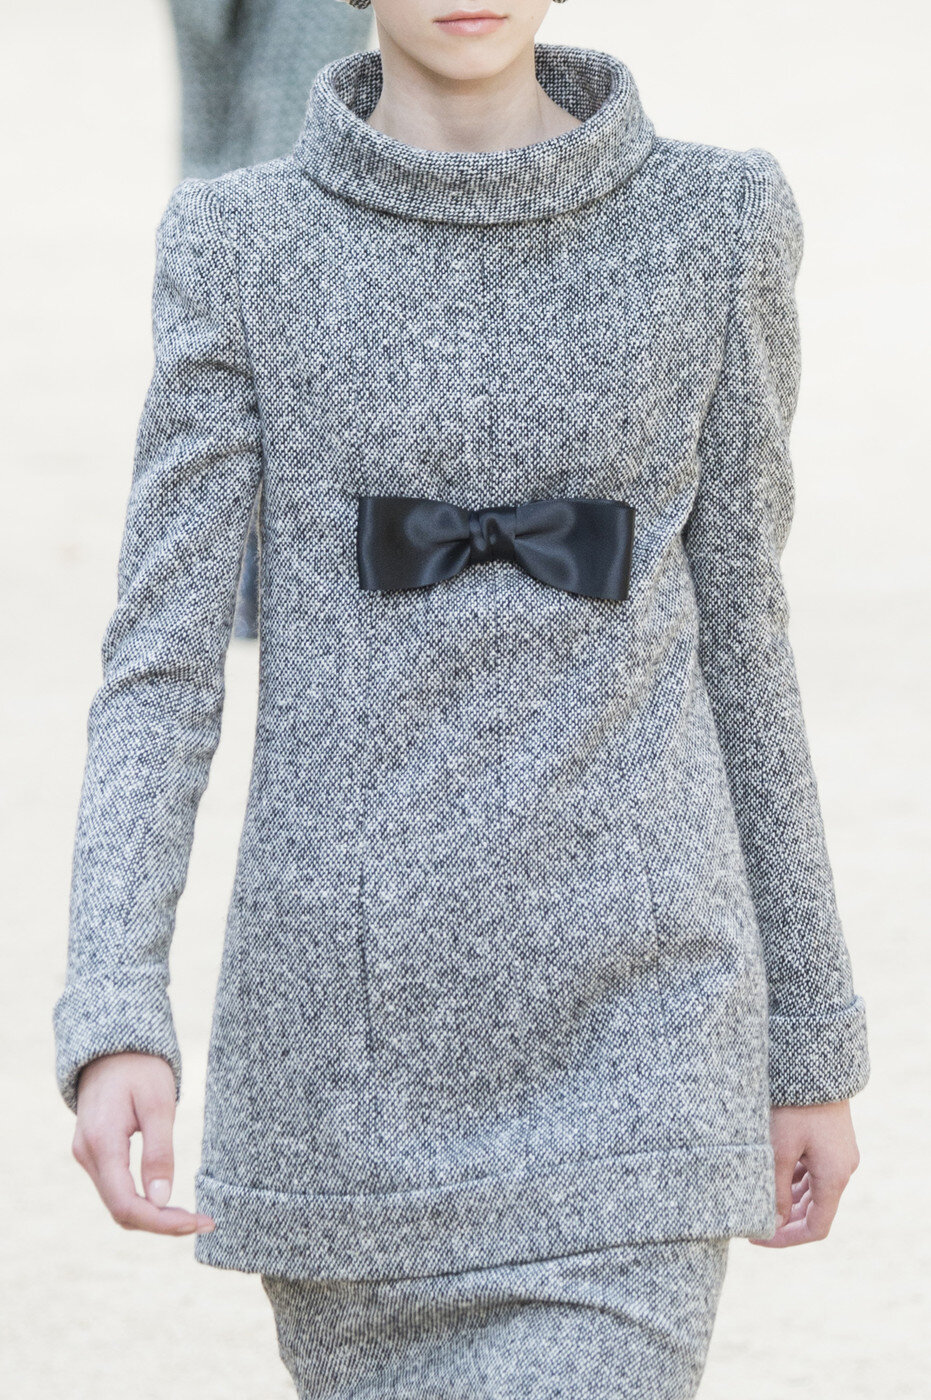 Chanel HC Tweed Bow-Embellished Tunic in Grey.jpg